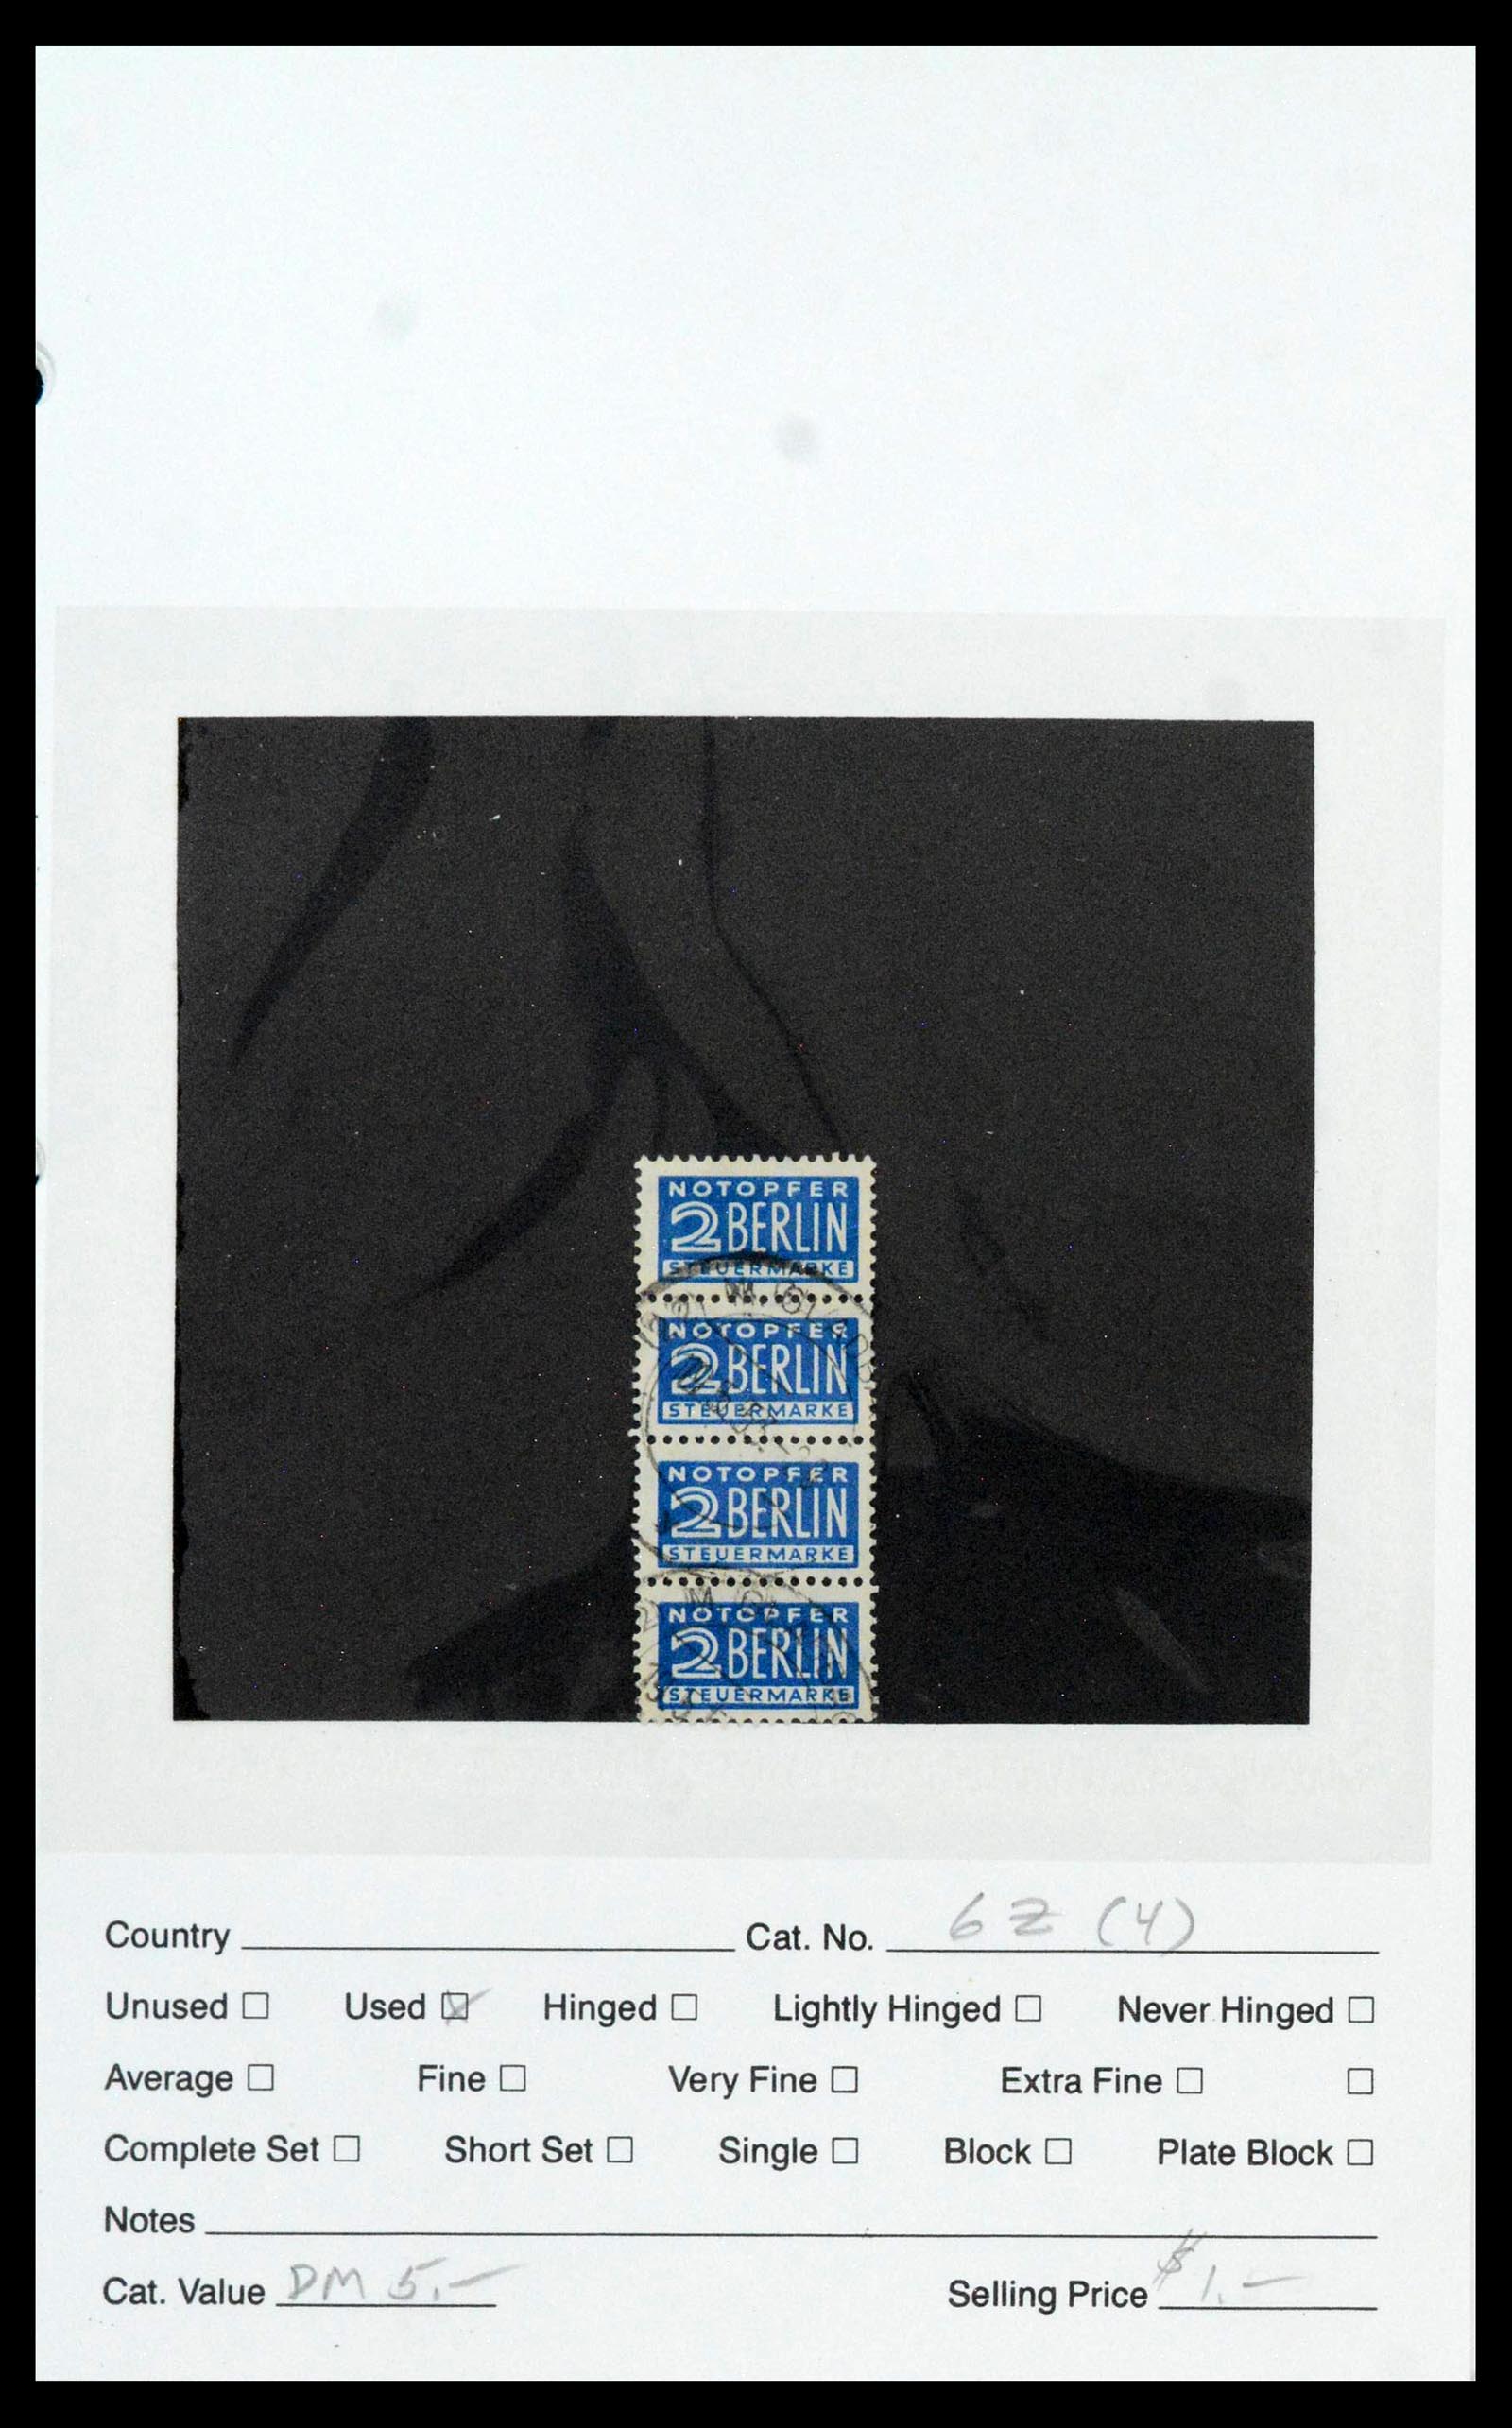 39459 0047 - Stamp collection 39459 Berlin notopfer 1948-1949.